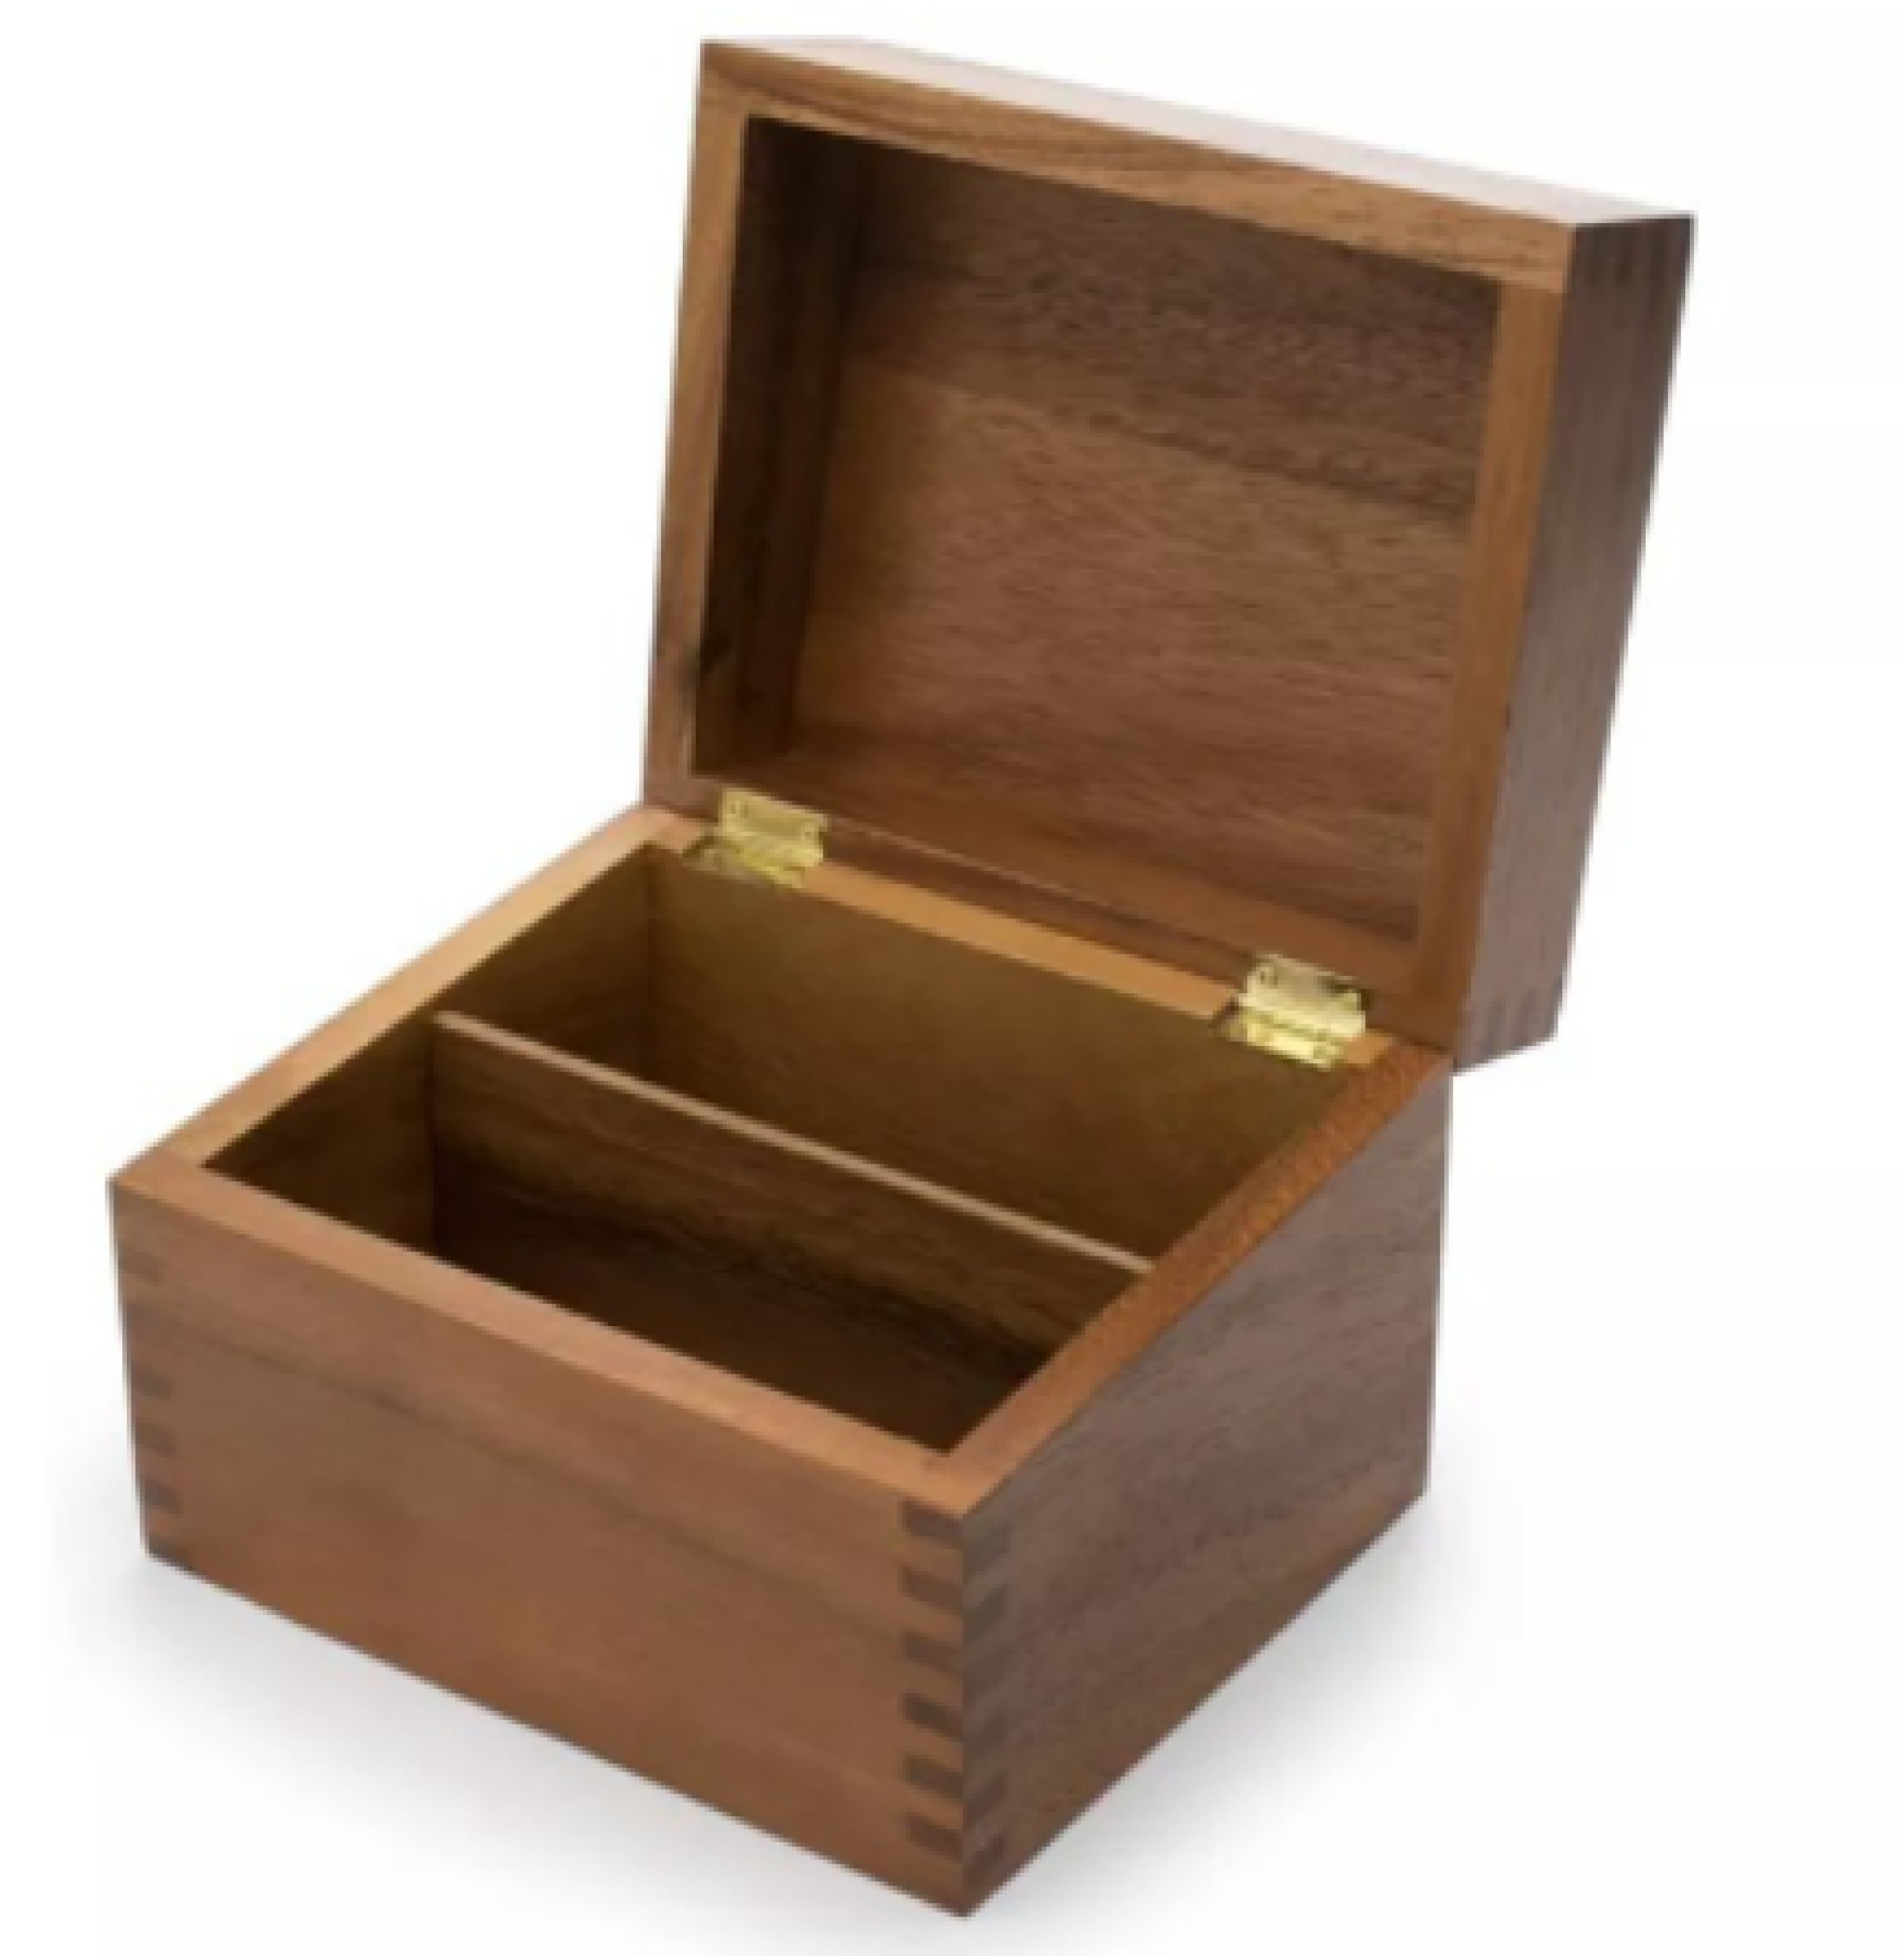 Acacia wood recipe box wooden formula box